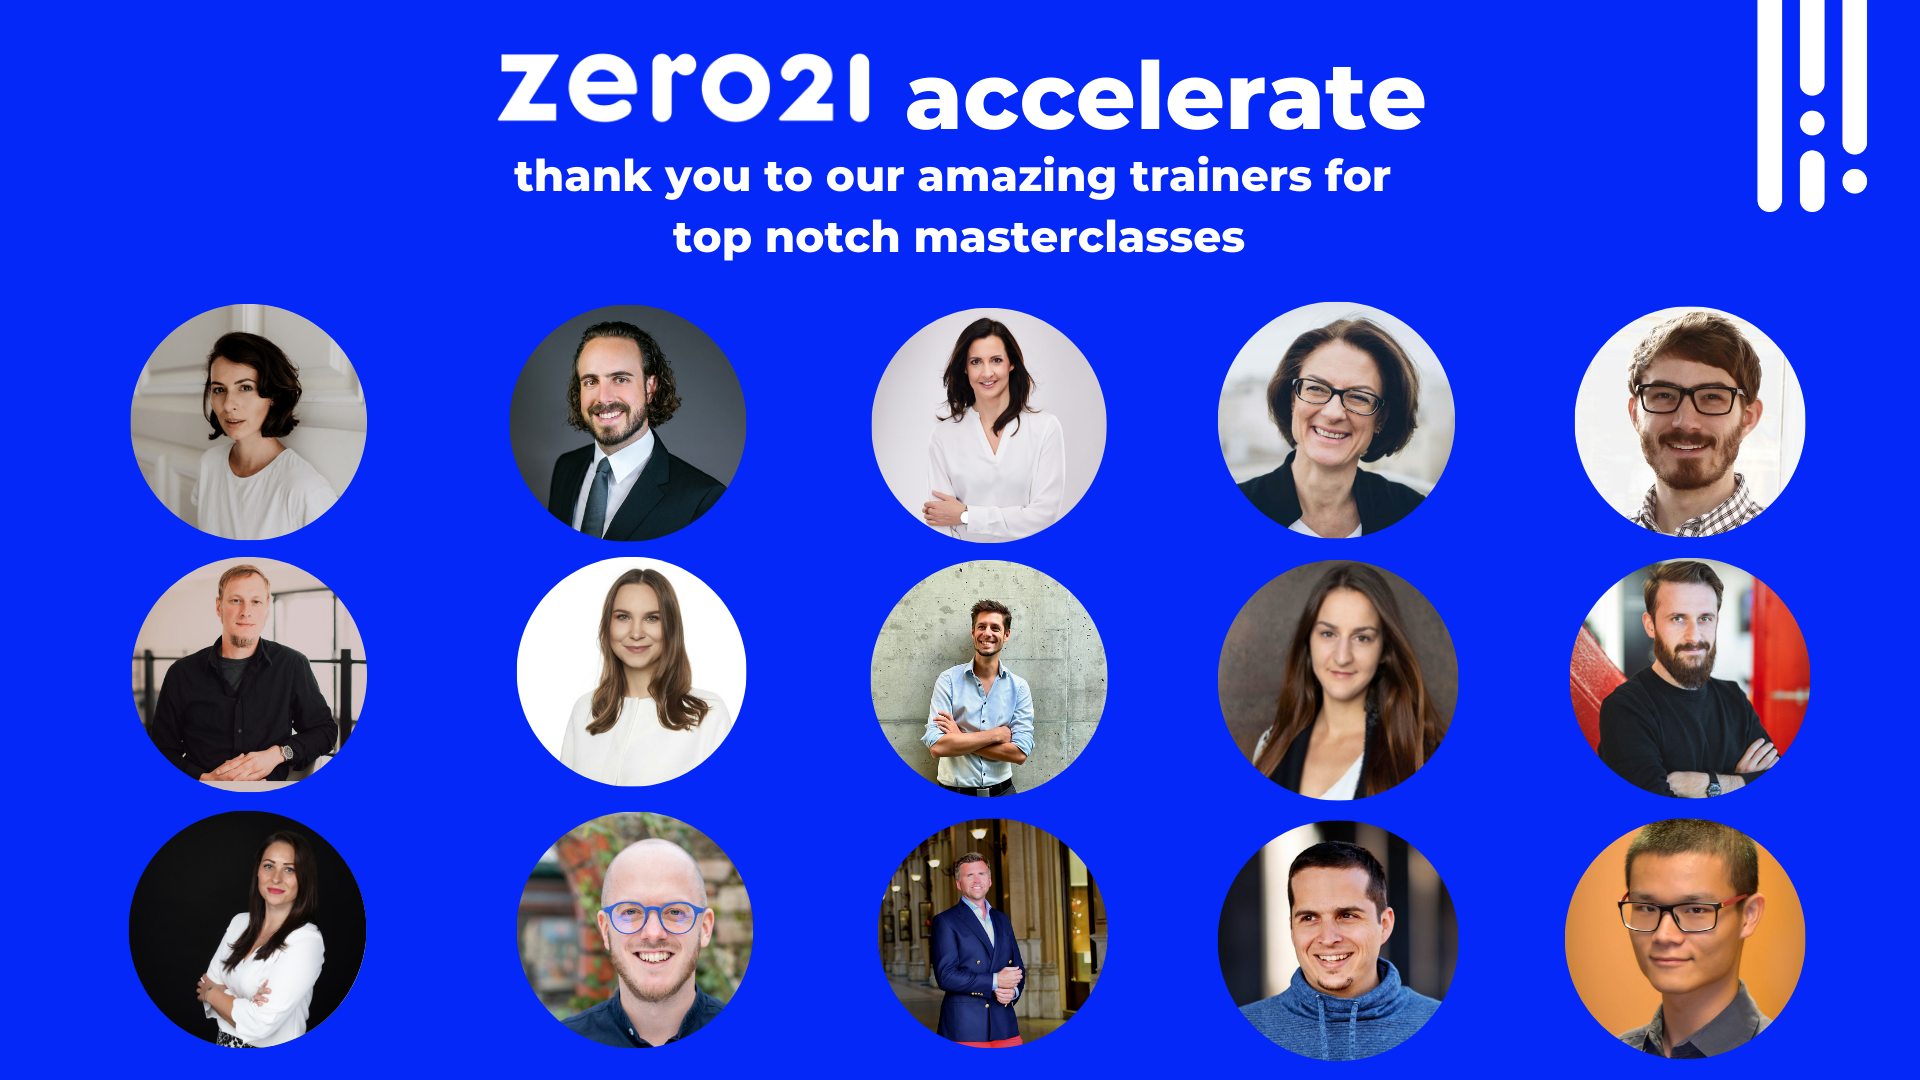 trainers_zero21 acceleration